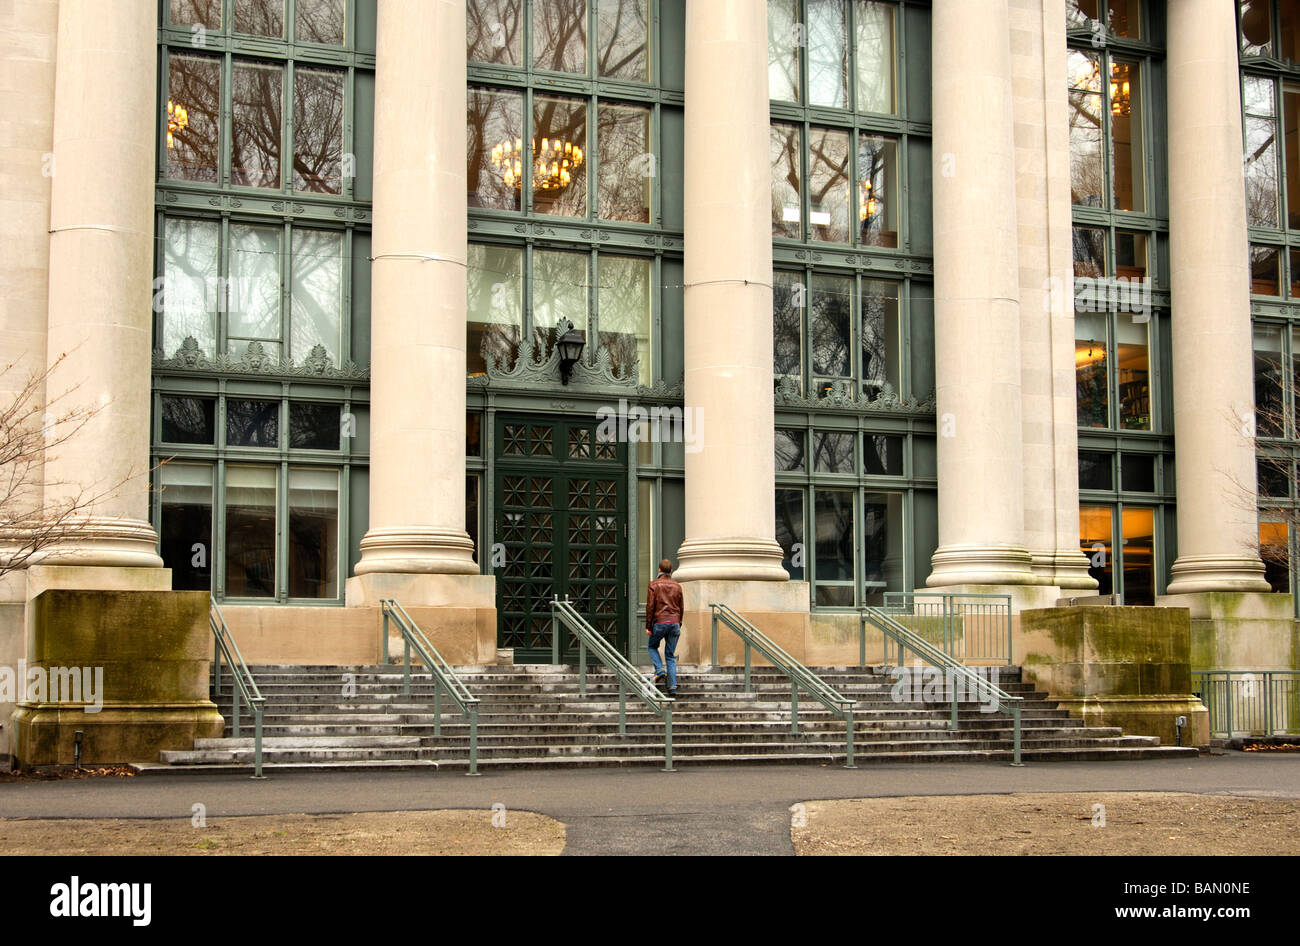 Eingang an der Harvard Law School Bibliothek Langdell Hall auf dem Campus der Harvard University, Cambridge, Massachusetts, USA Stockfoto